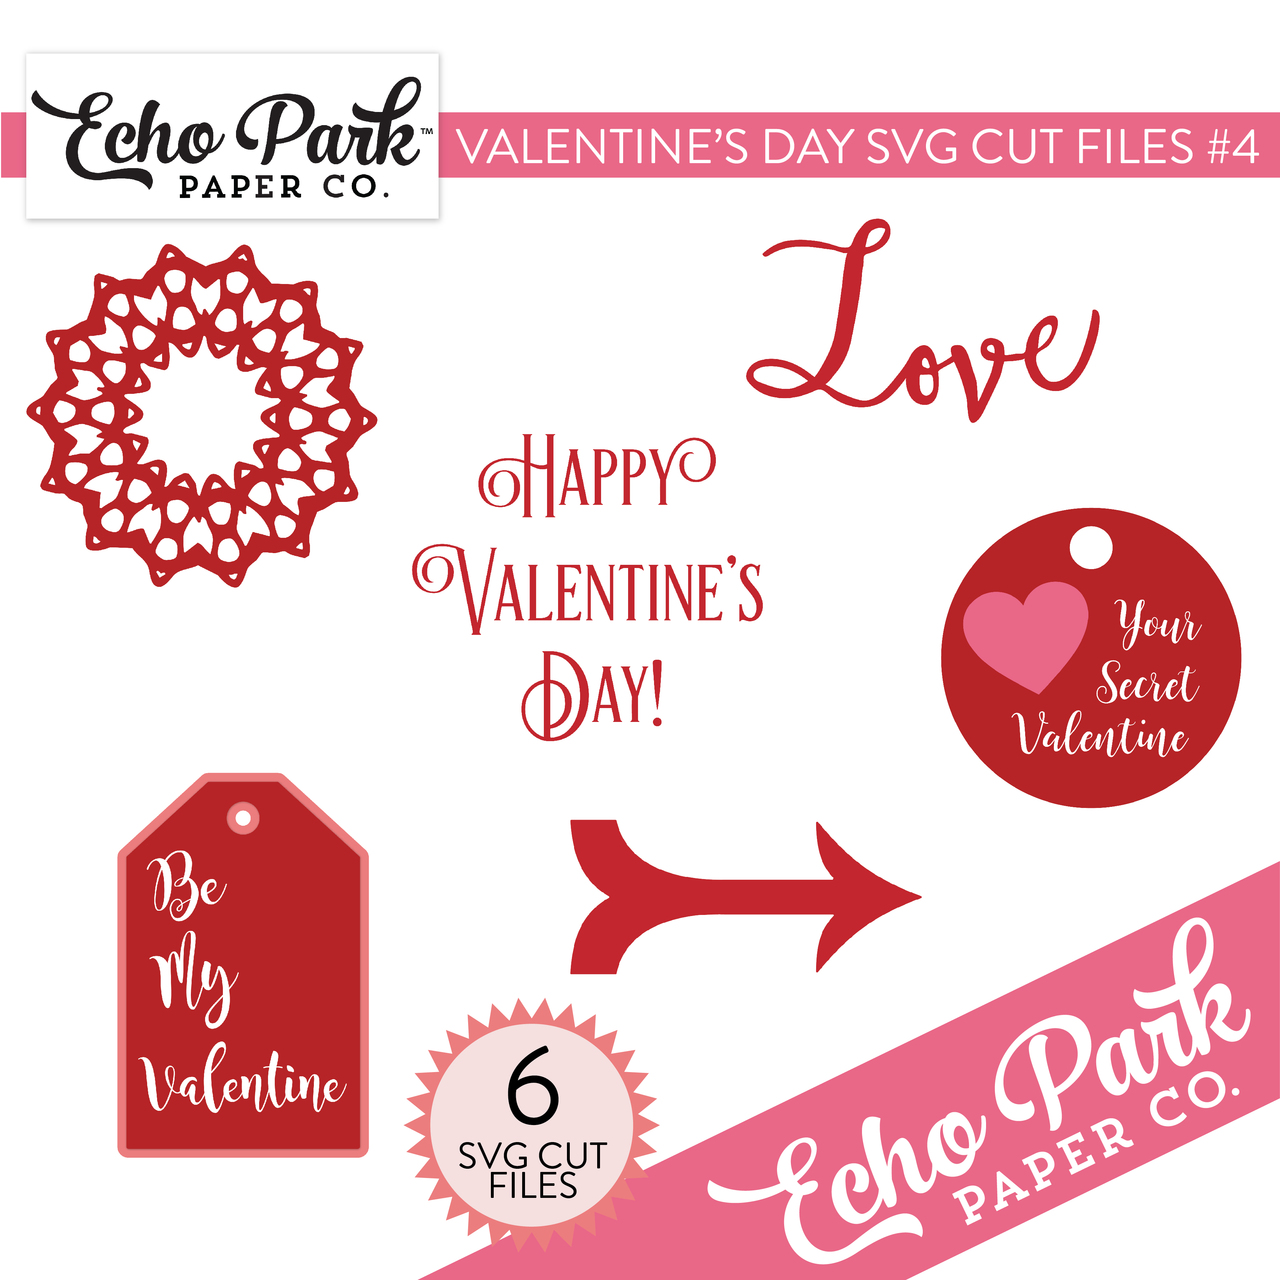 Valentines SVG Cut Files #4